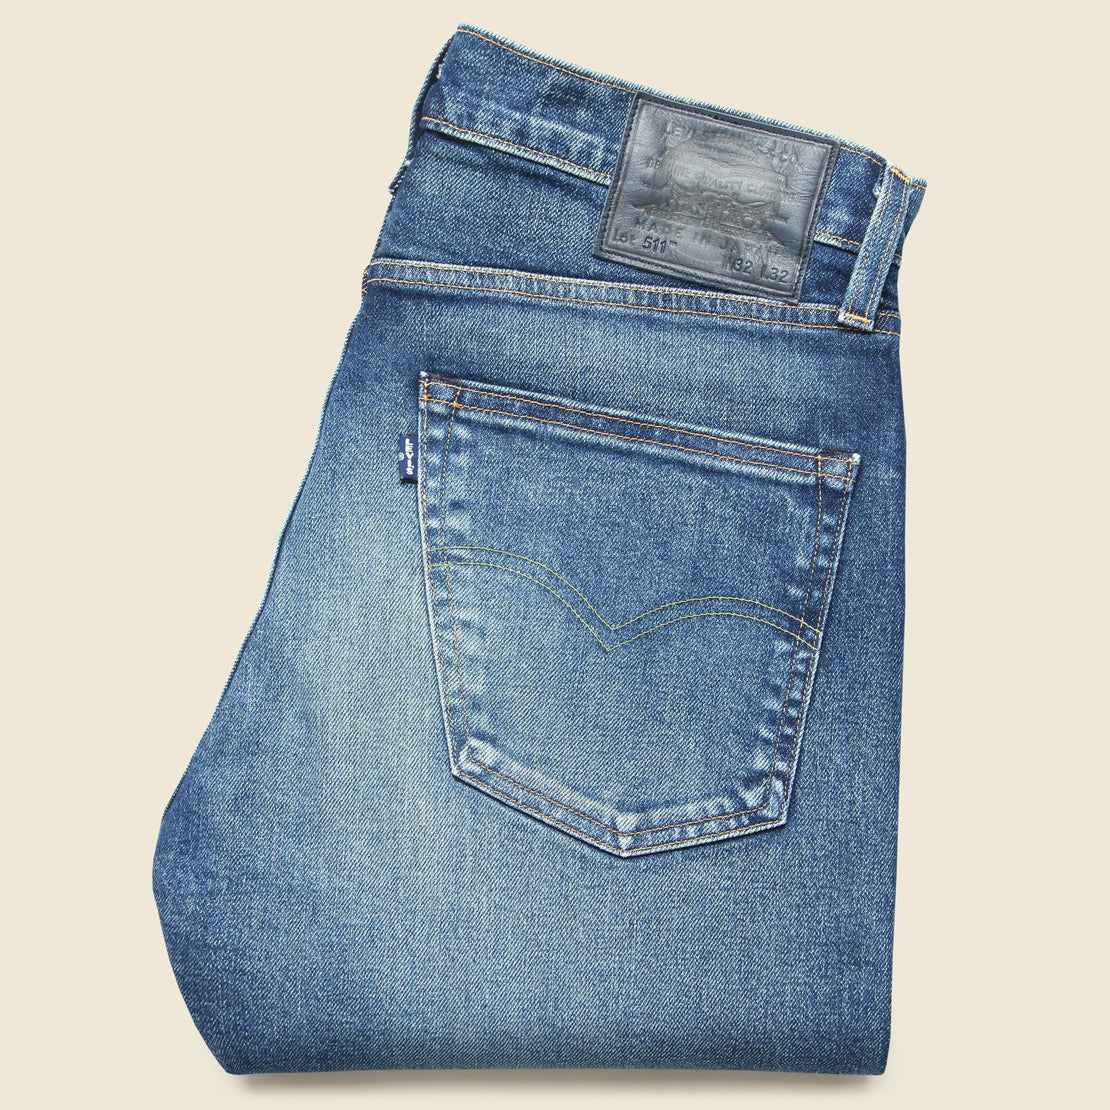 511 Slim Fit Jean - Shinso Mizu - Levi's Made in Japan - STAG Provisions - Pants - Denim